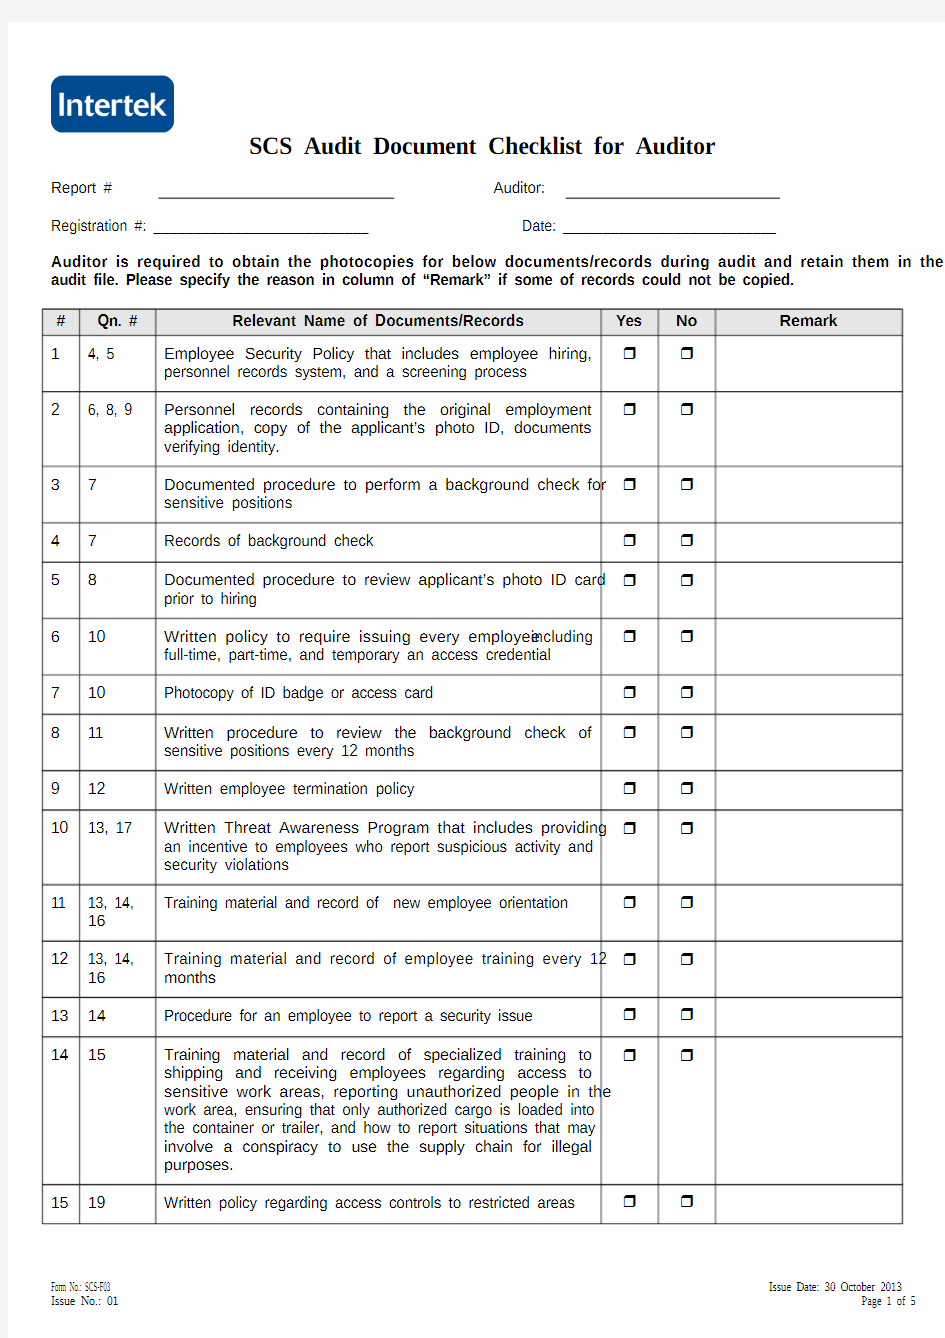 SCS-F03 Auditor Document Checklist